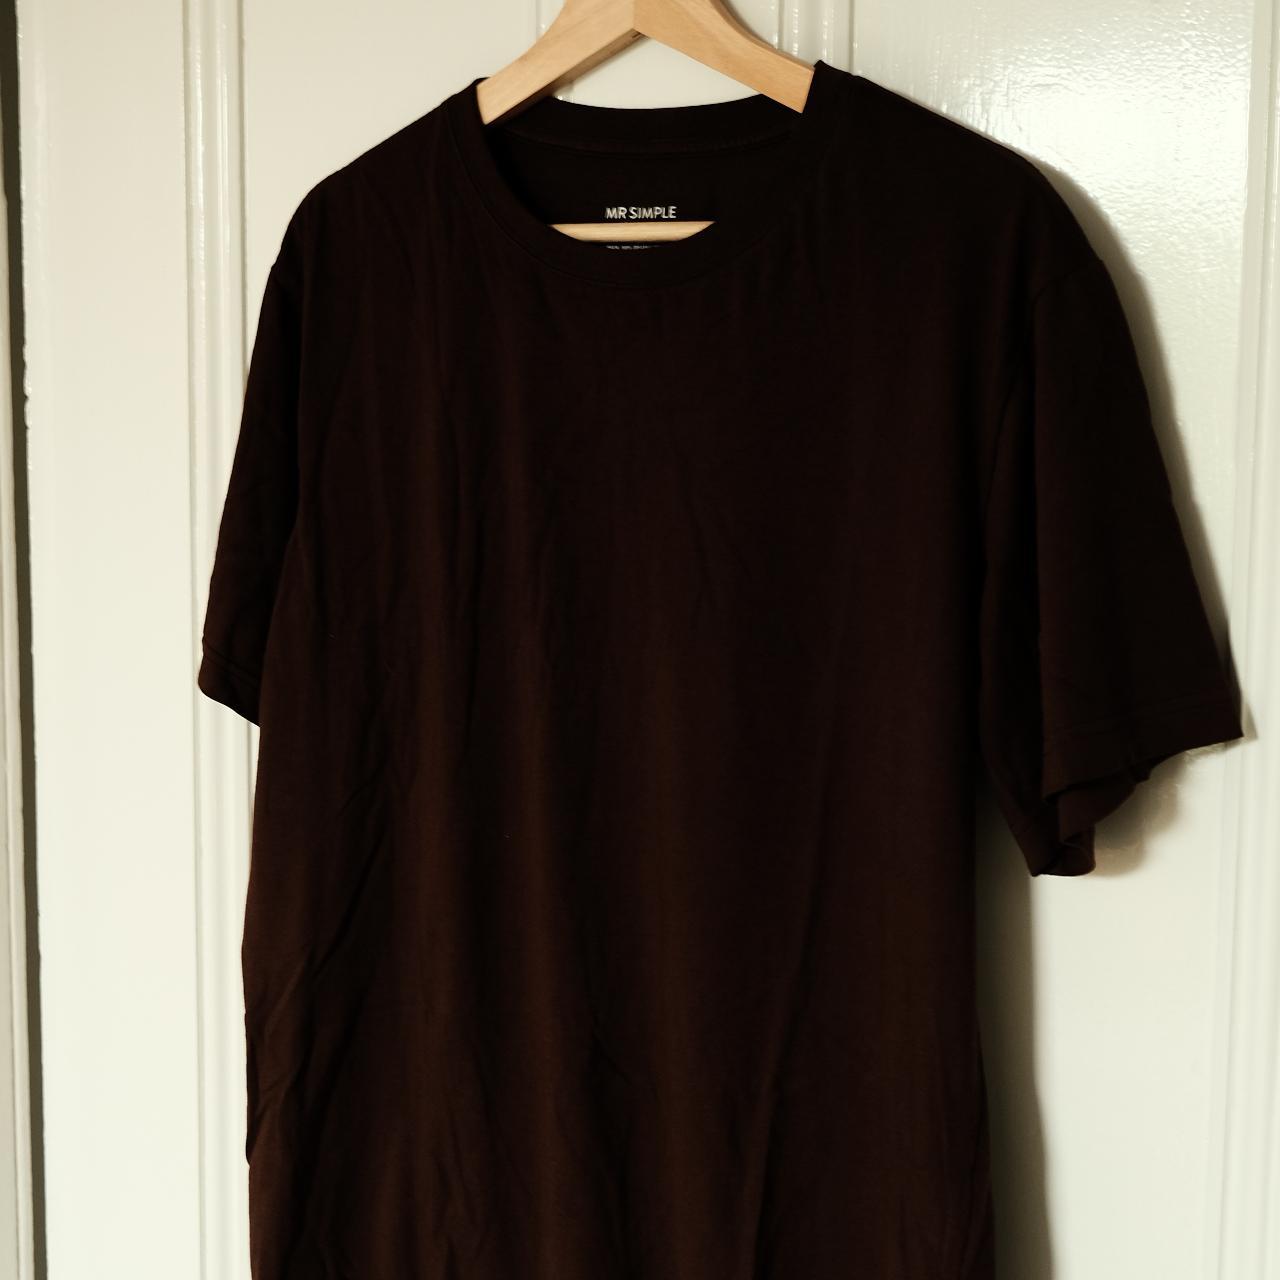 Mr. Simple Brown T-Shirt - Medium - Depop